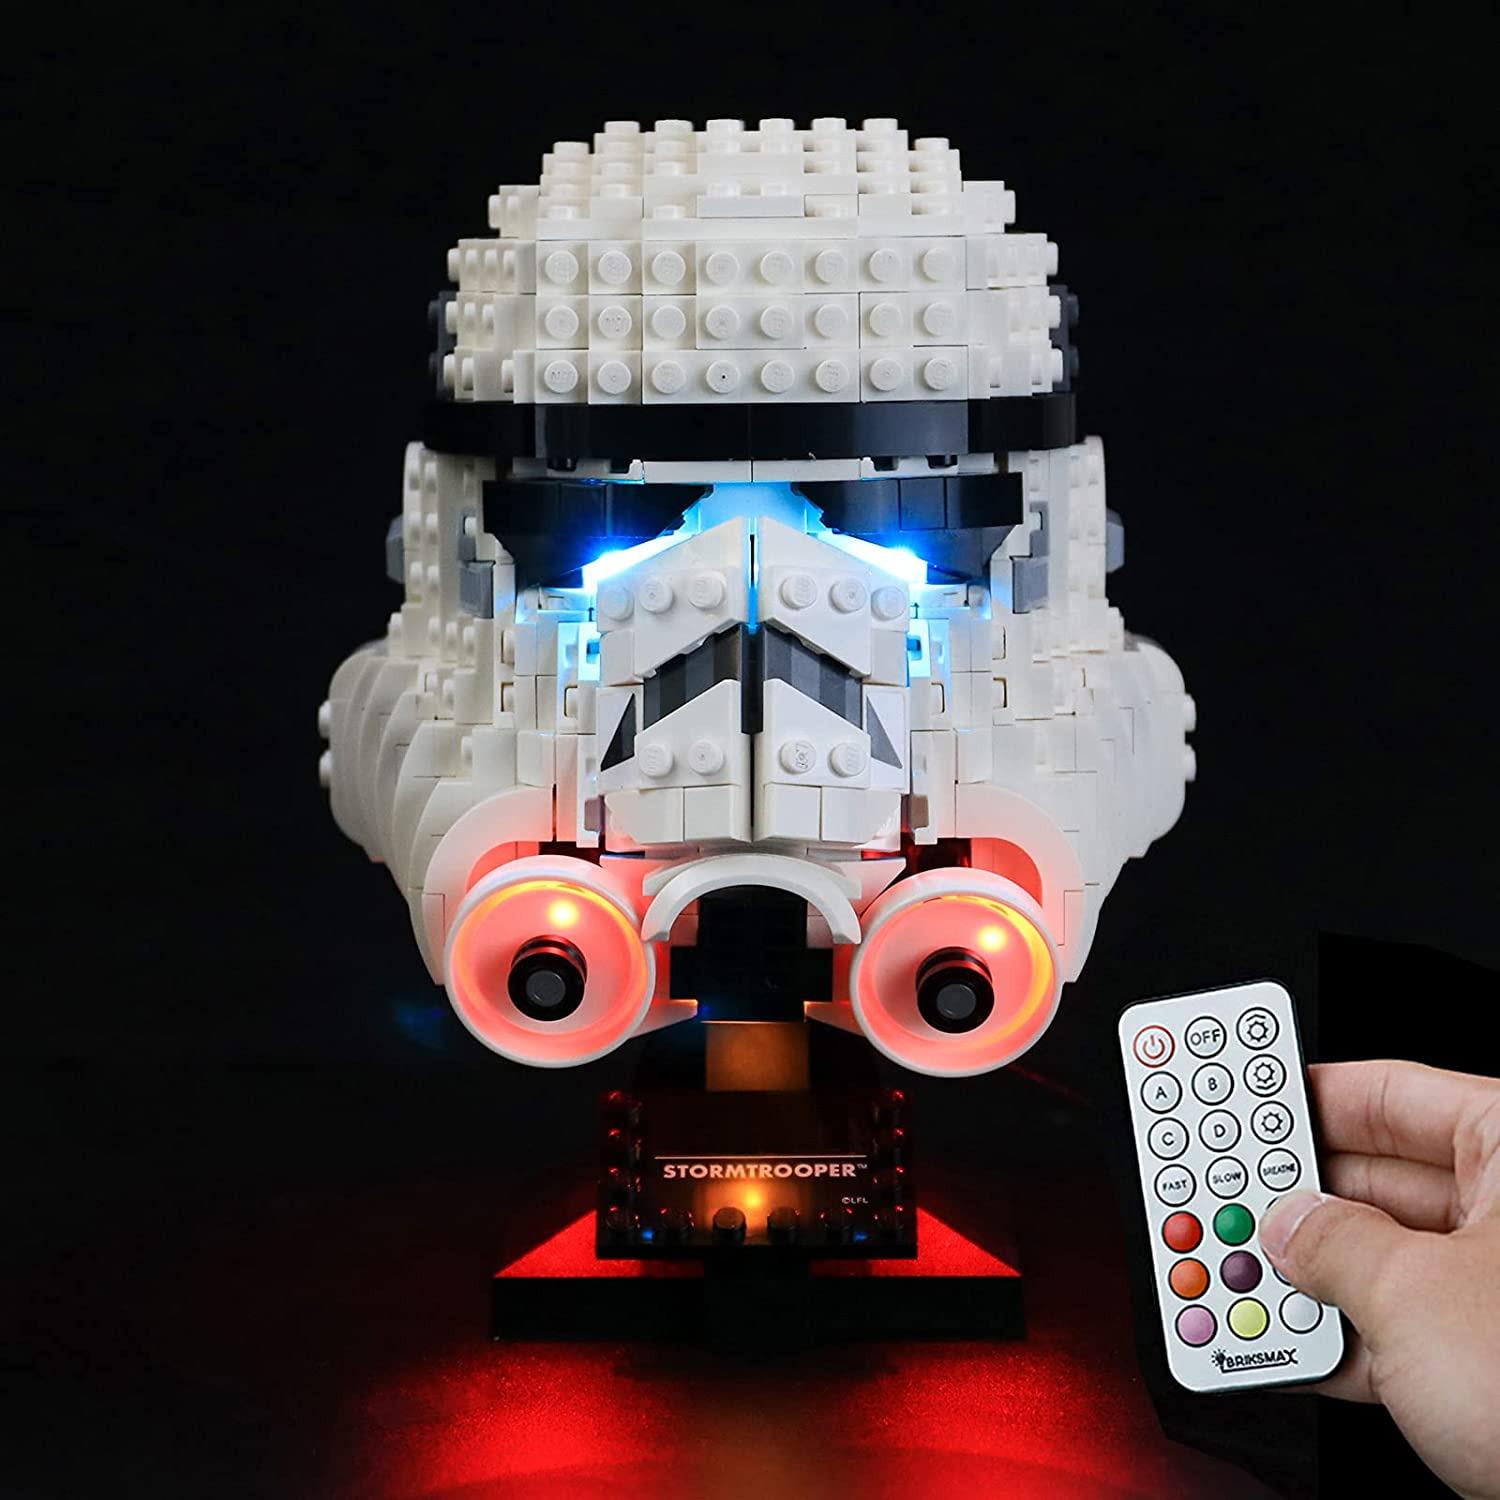 Lego constructions star wars casque stormtrooper 75276